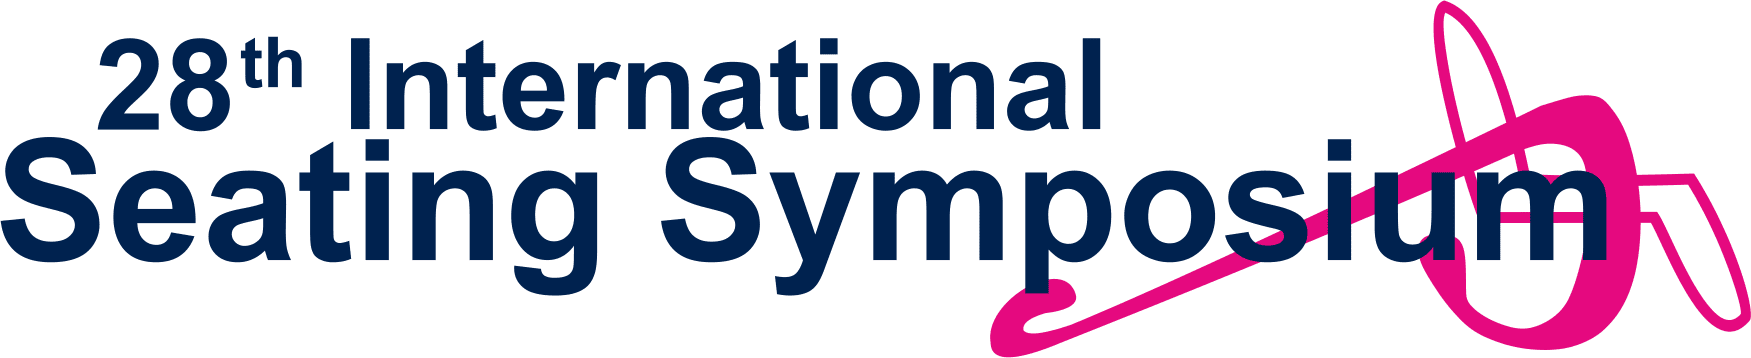 28th International Seating Symposium